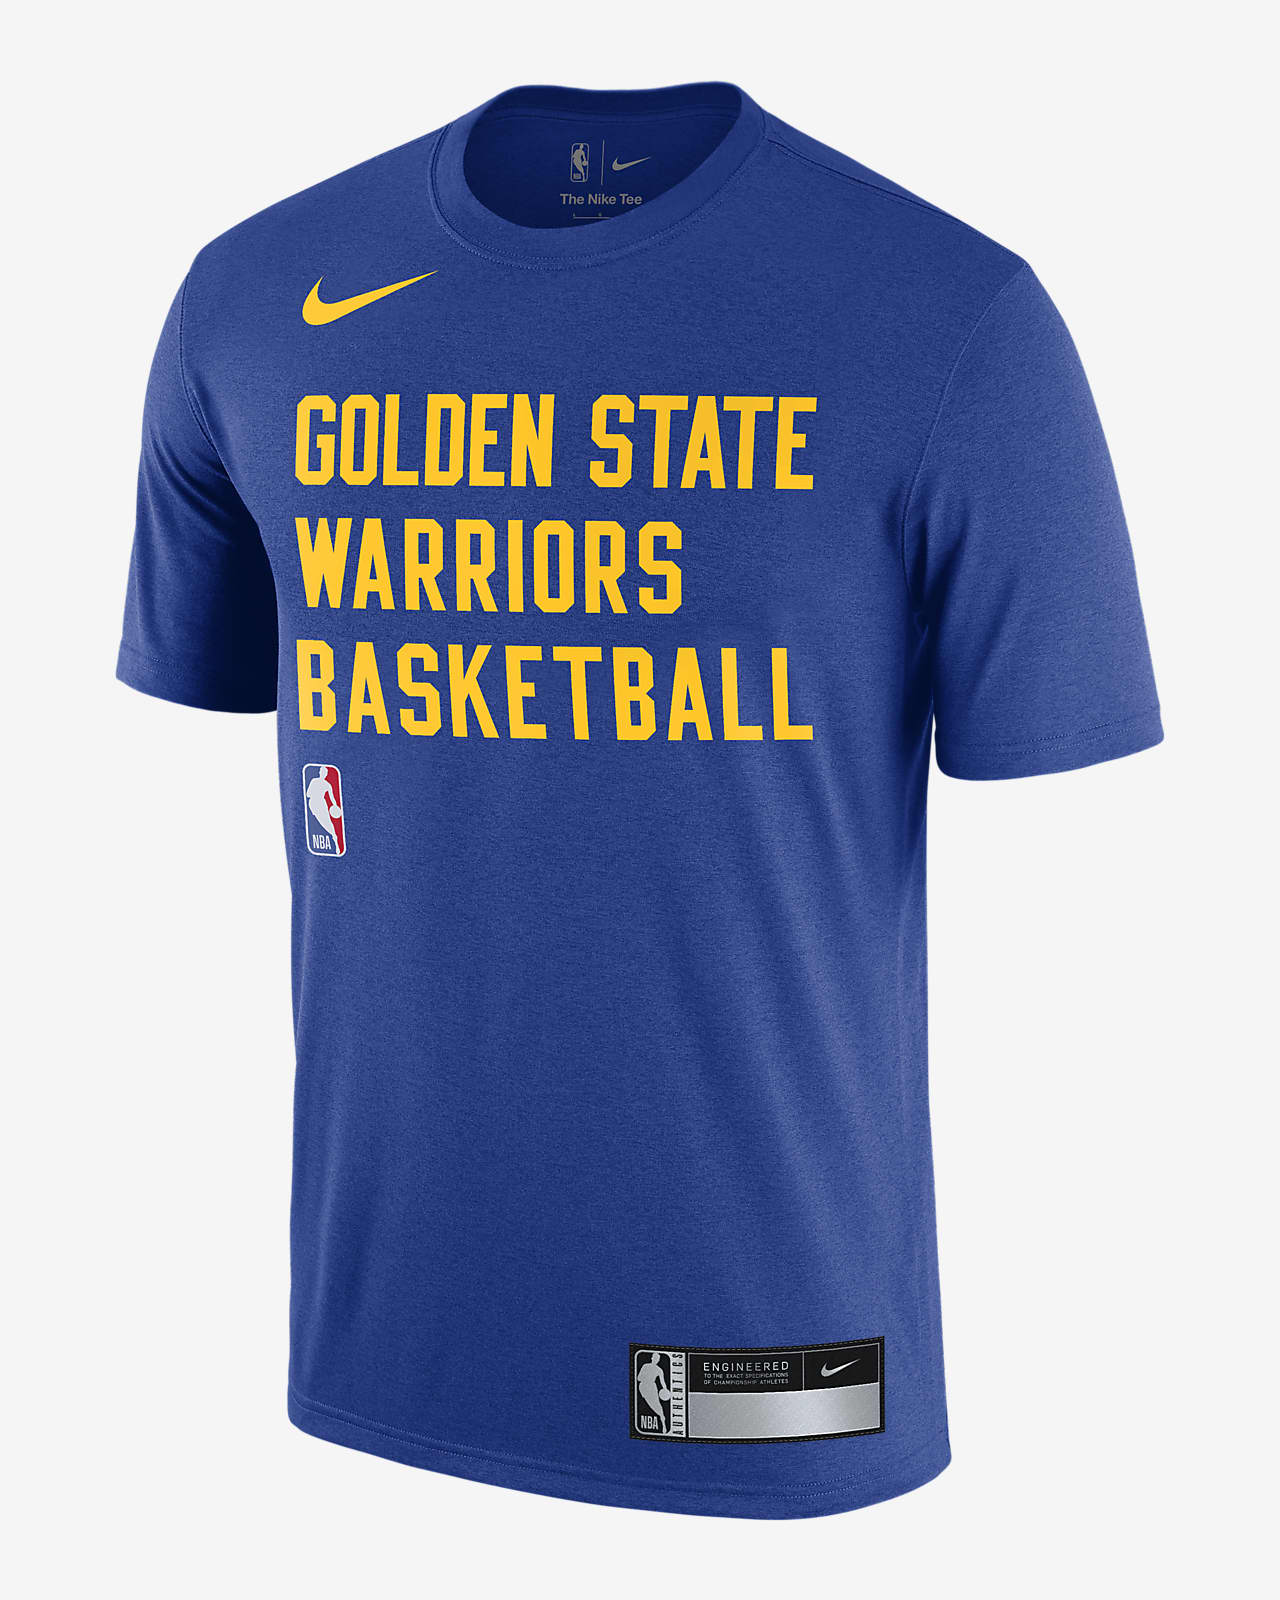 Warriors NBA Finals merchandise - Golden State Of Mind